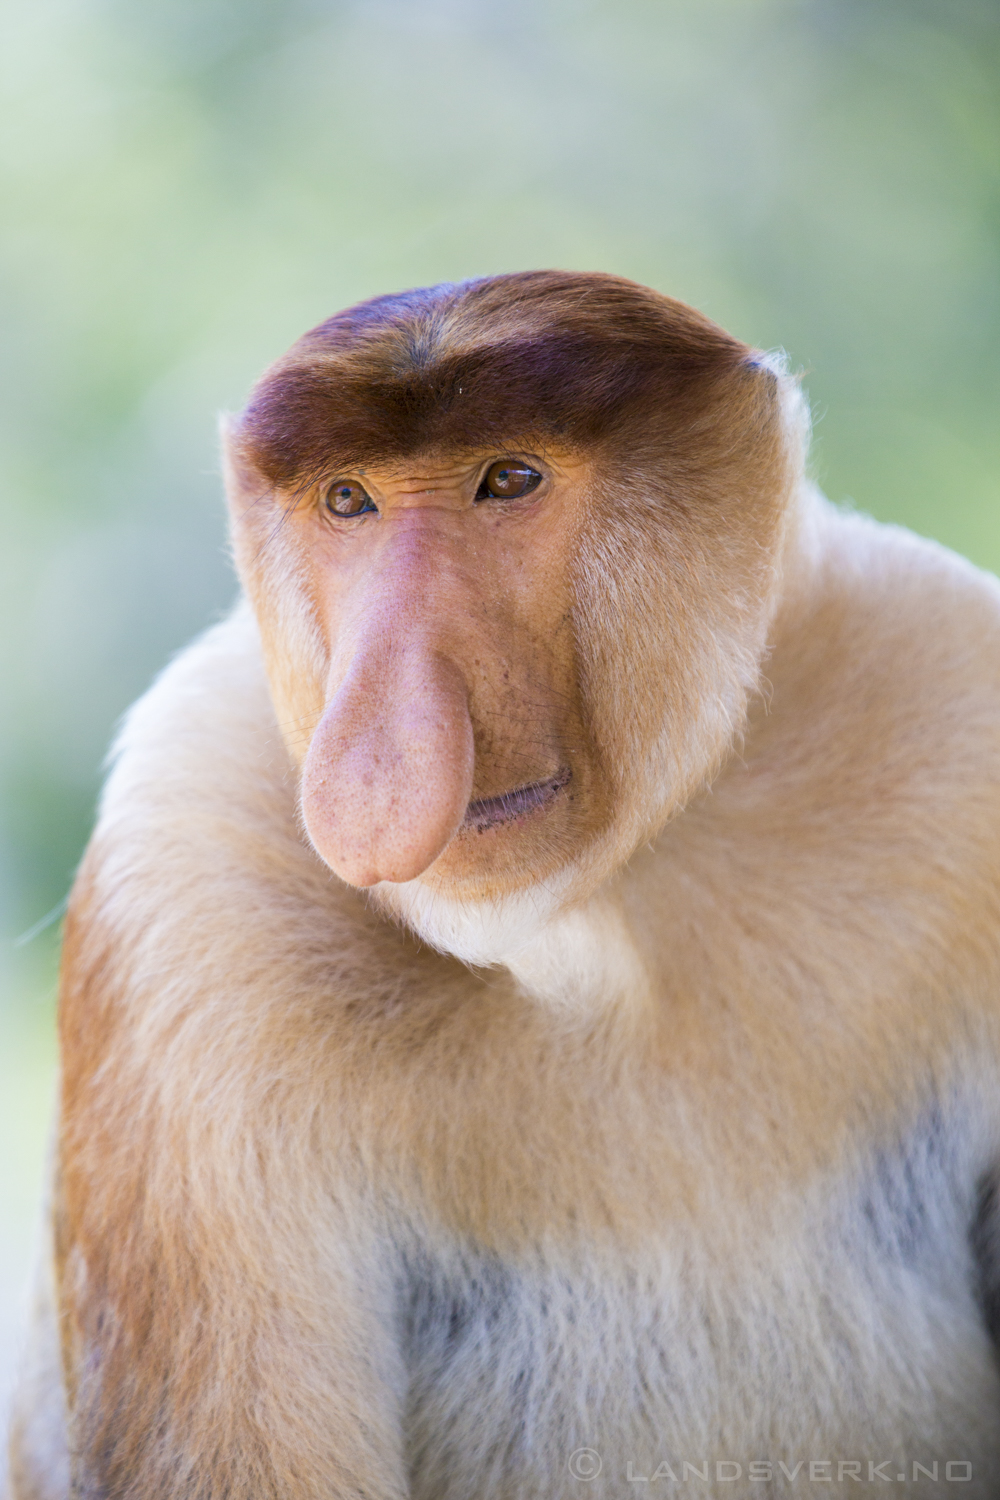 Wild Proboscis monkey. Kota Kinabatangan, Borneo.

(Canon EOS 5D Mark III / Canon EF 70-200mm f/2.8 L IS II USM / Canon 2x EF Extender III)